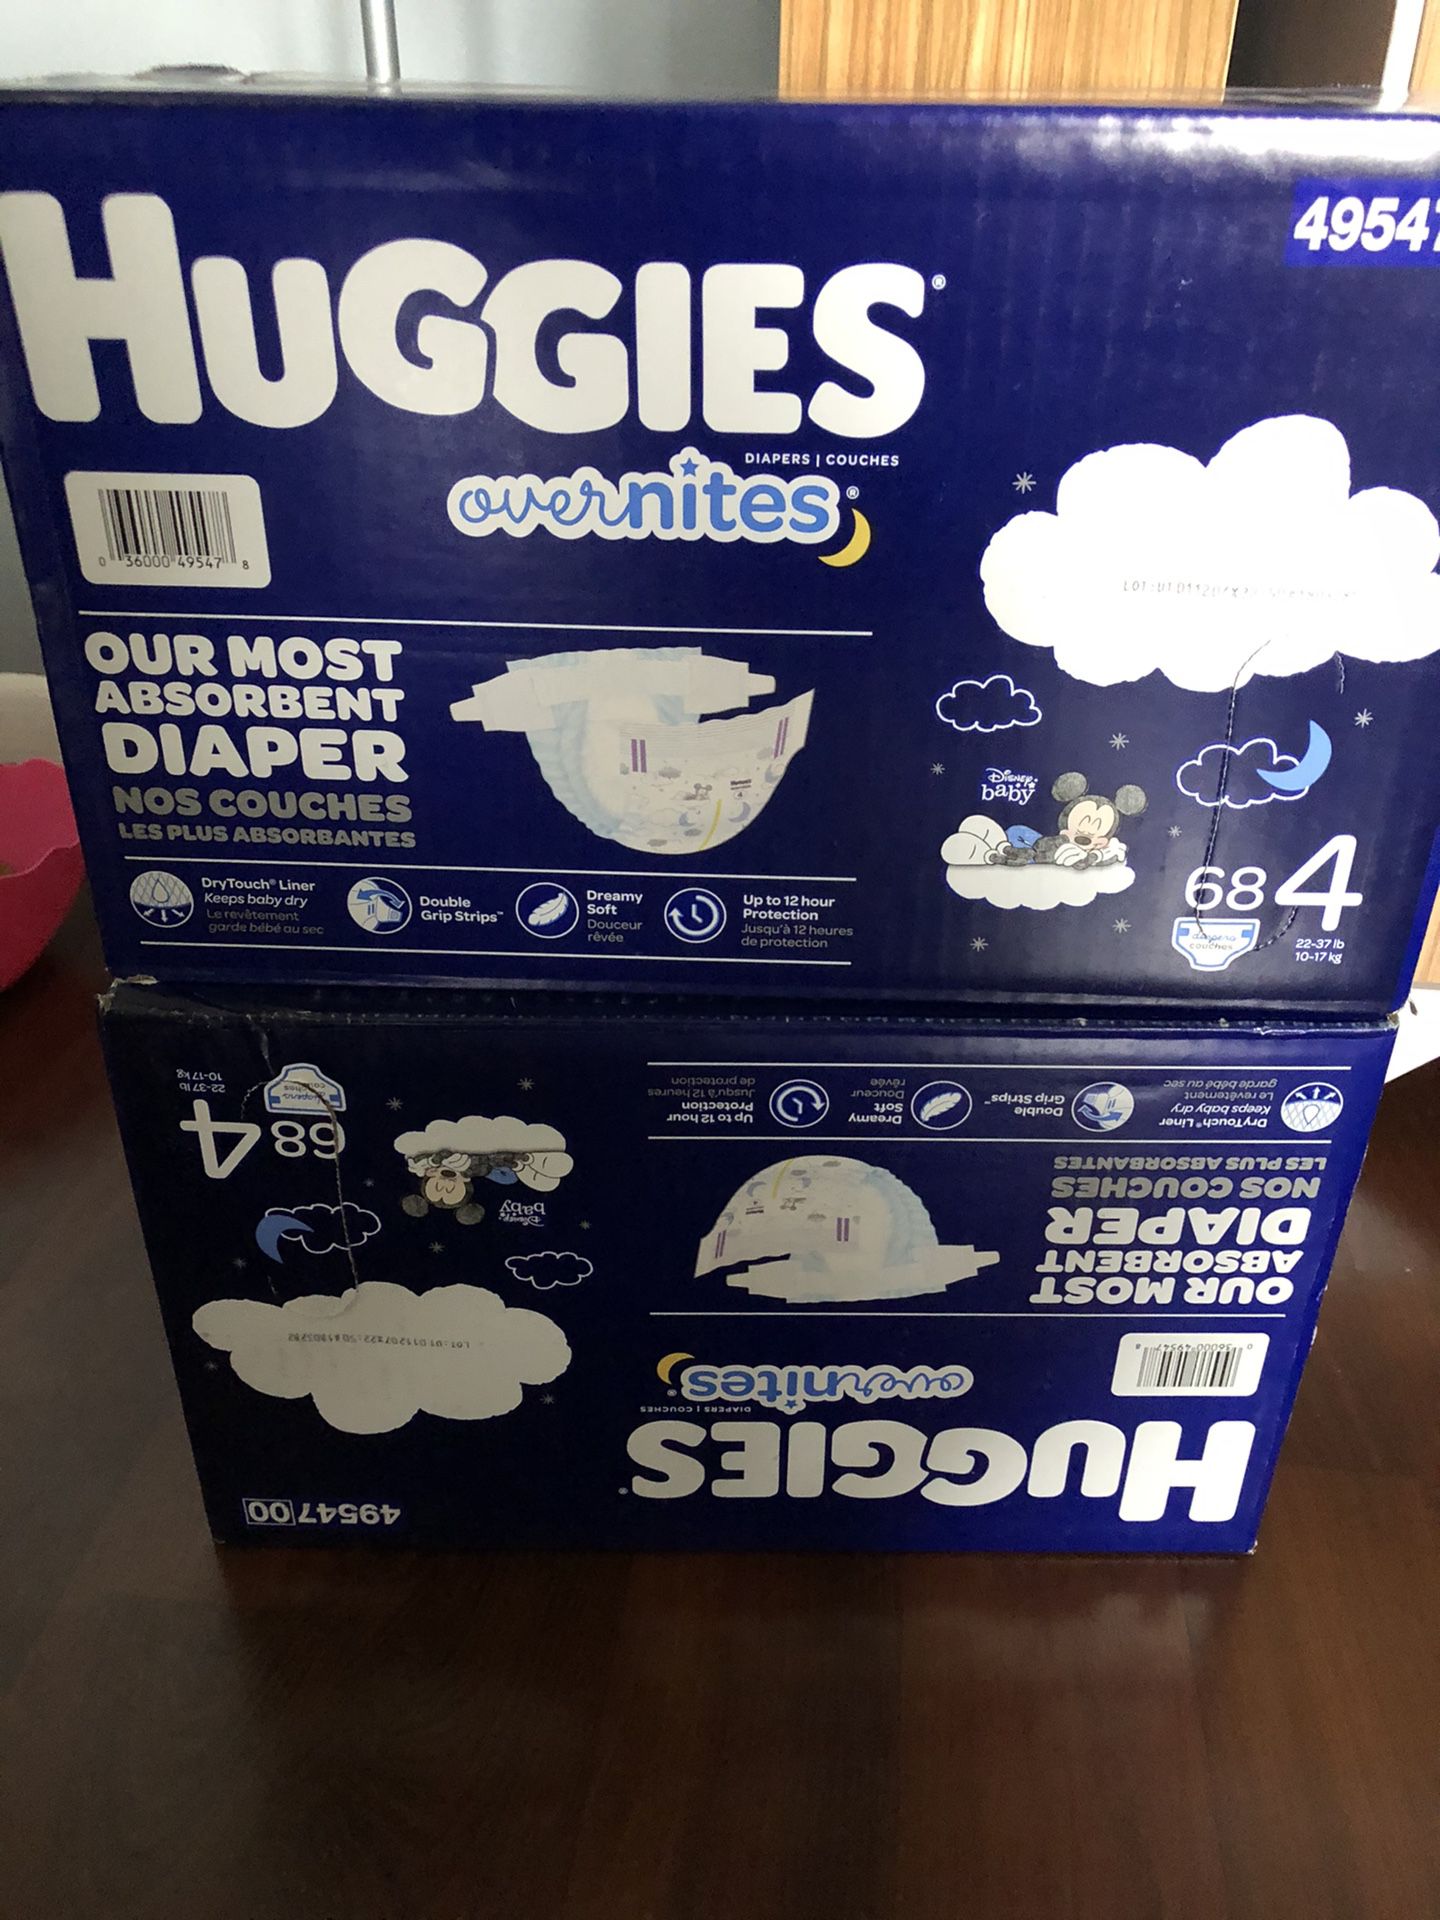 Huggies size 4, 68 count